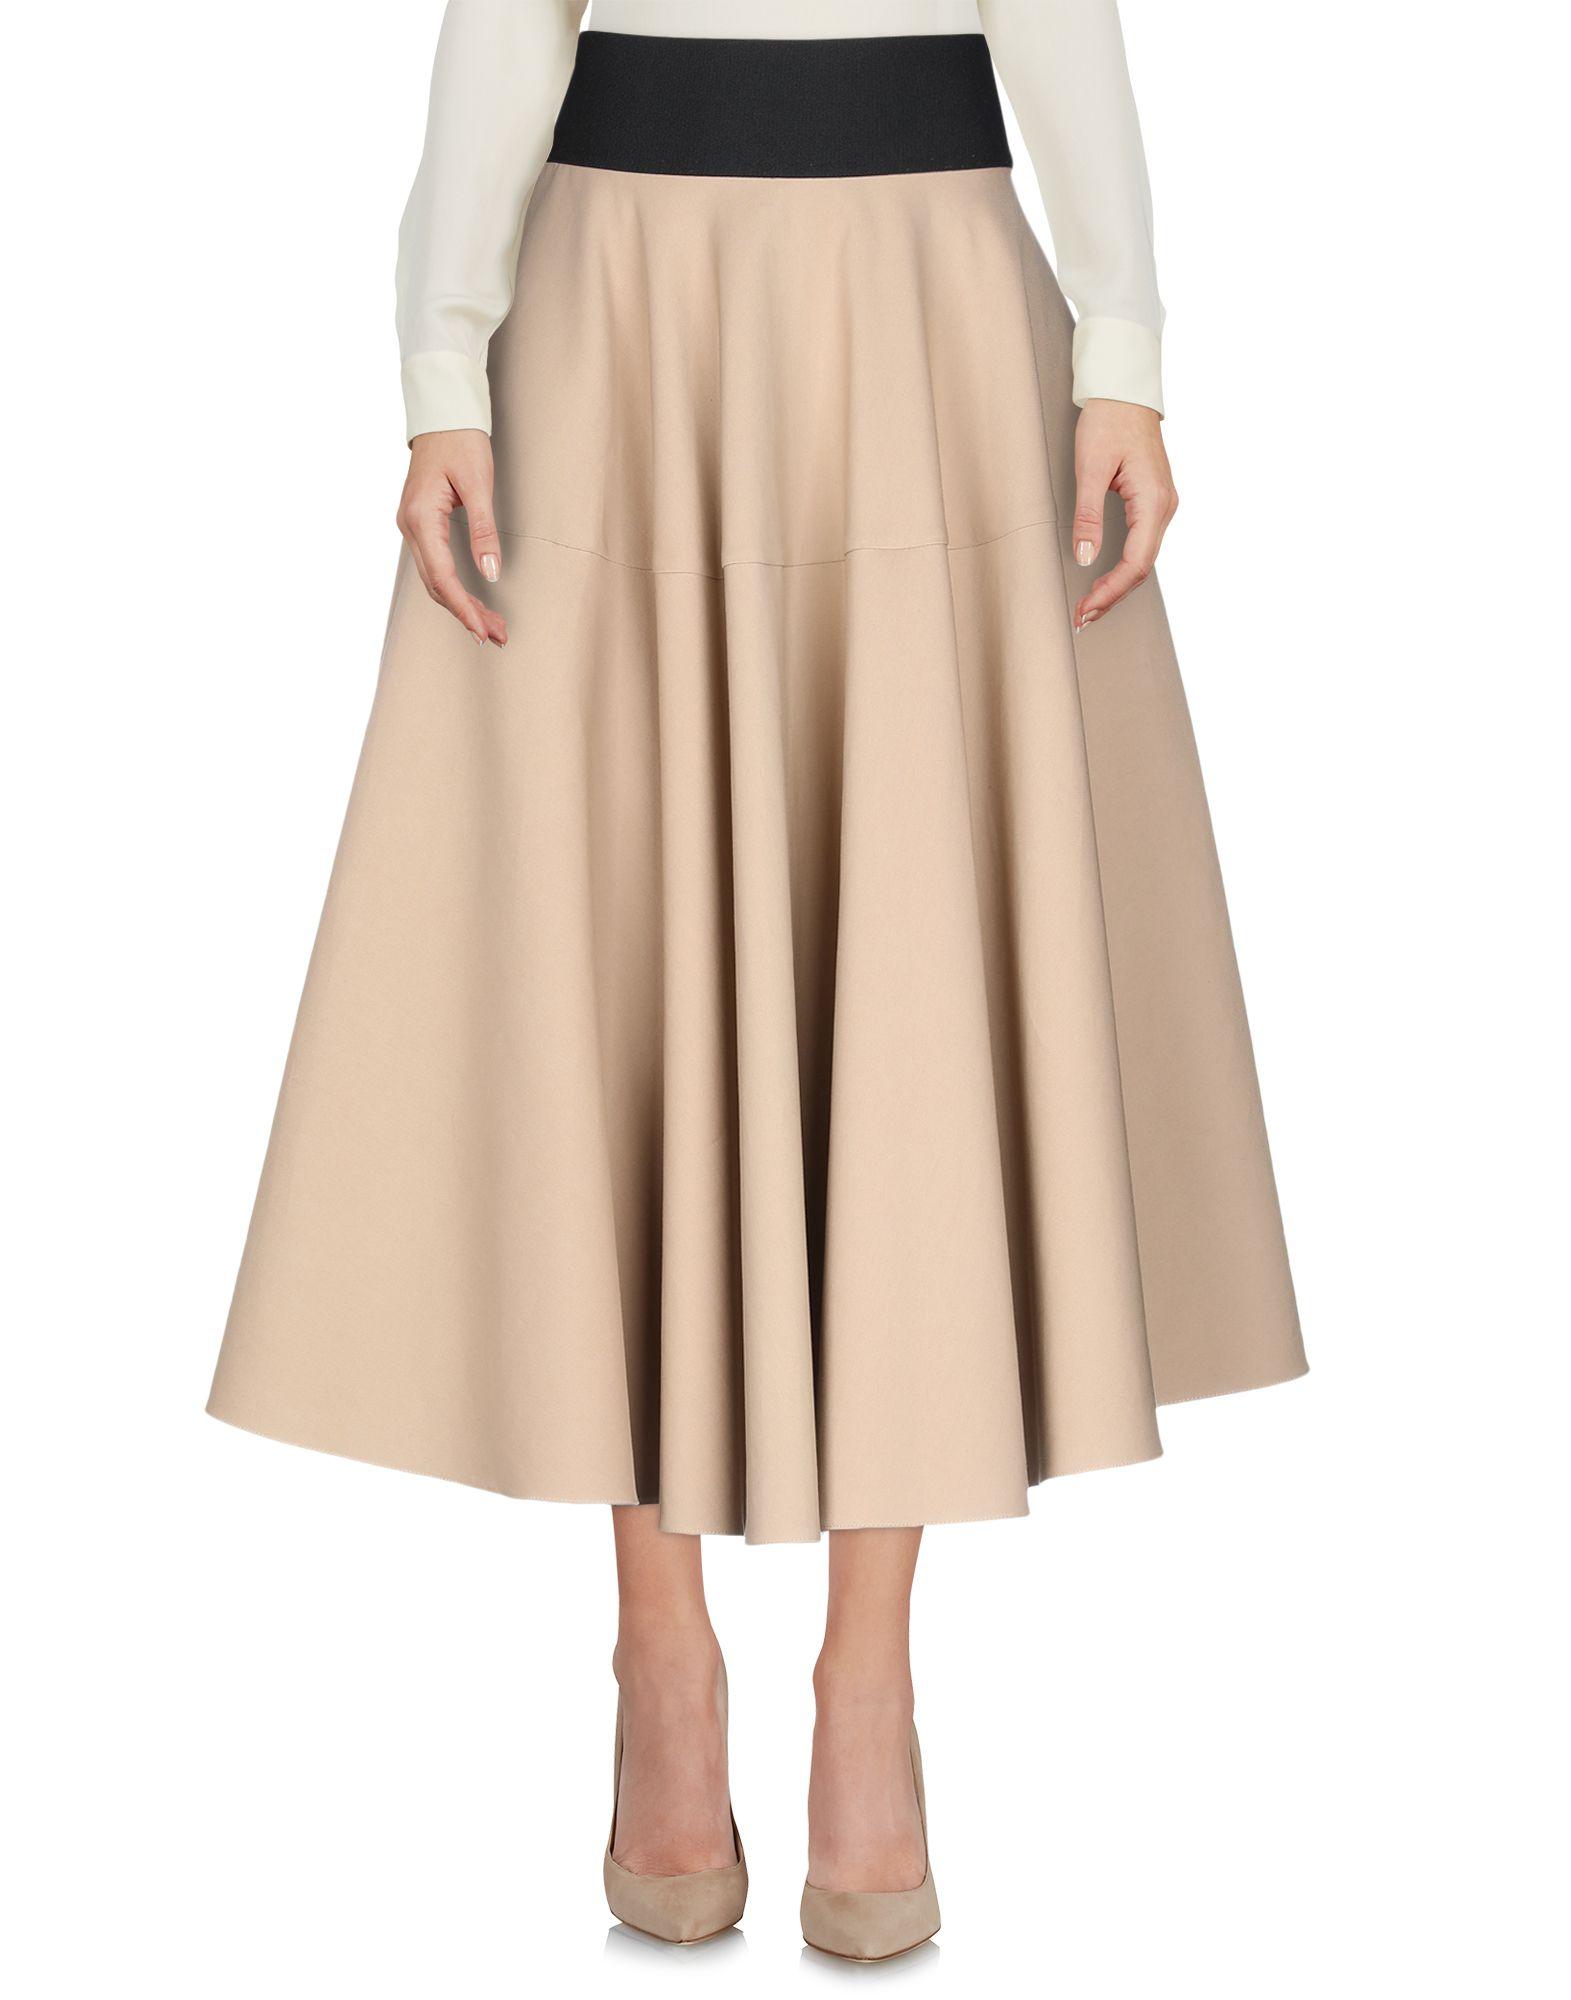 Marni 3/4 Length Skirt in Natural - Lyst